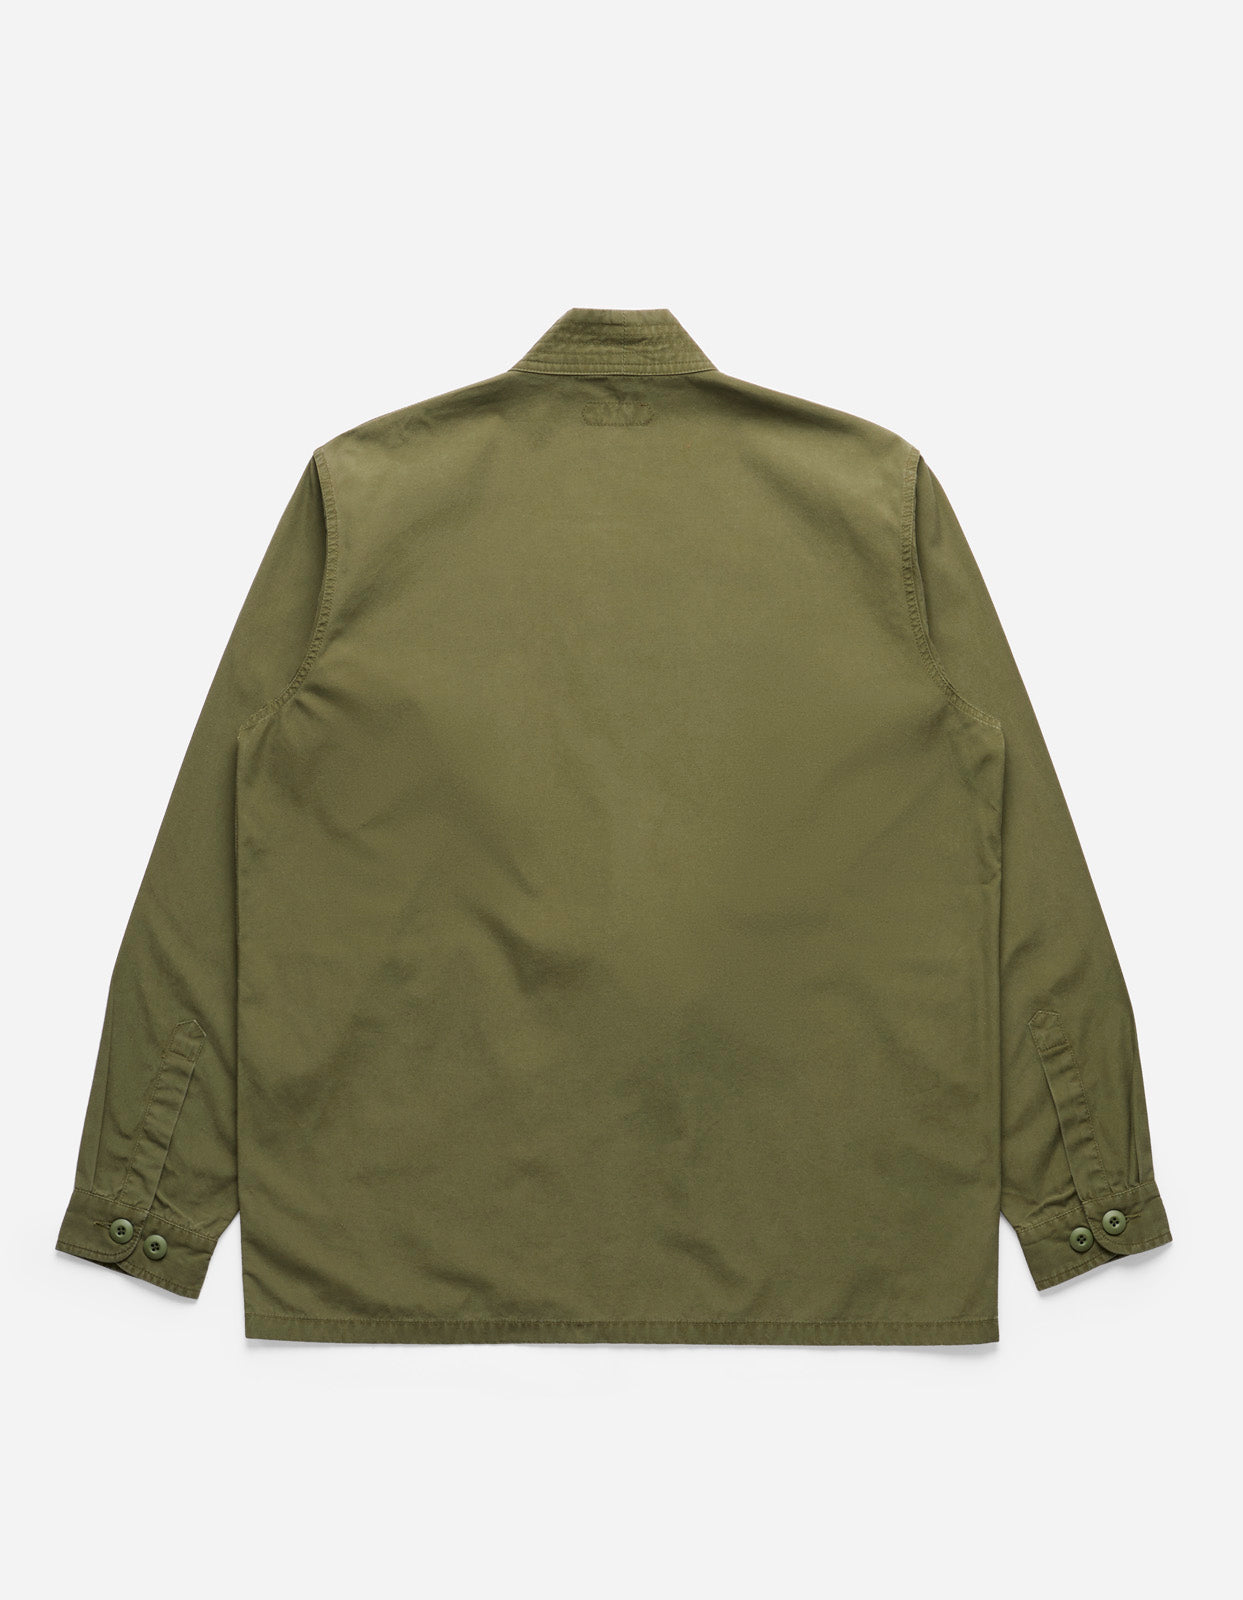 8190 U.S. Hanten Shirt Olive OG-107F